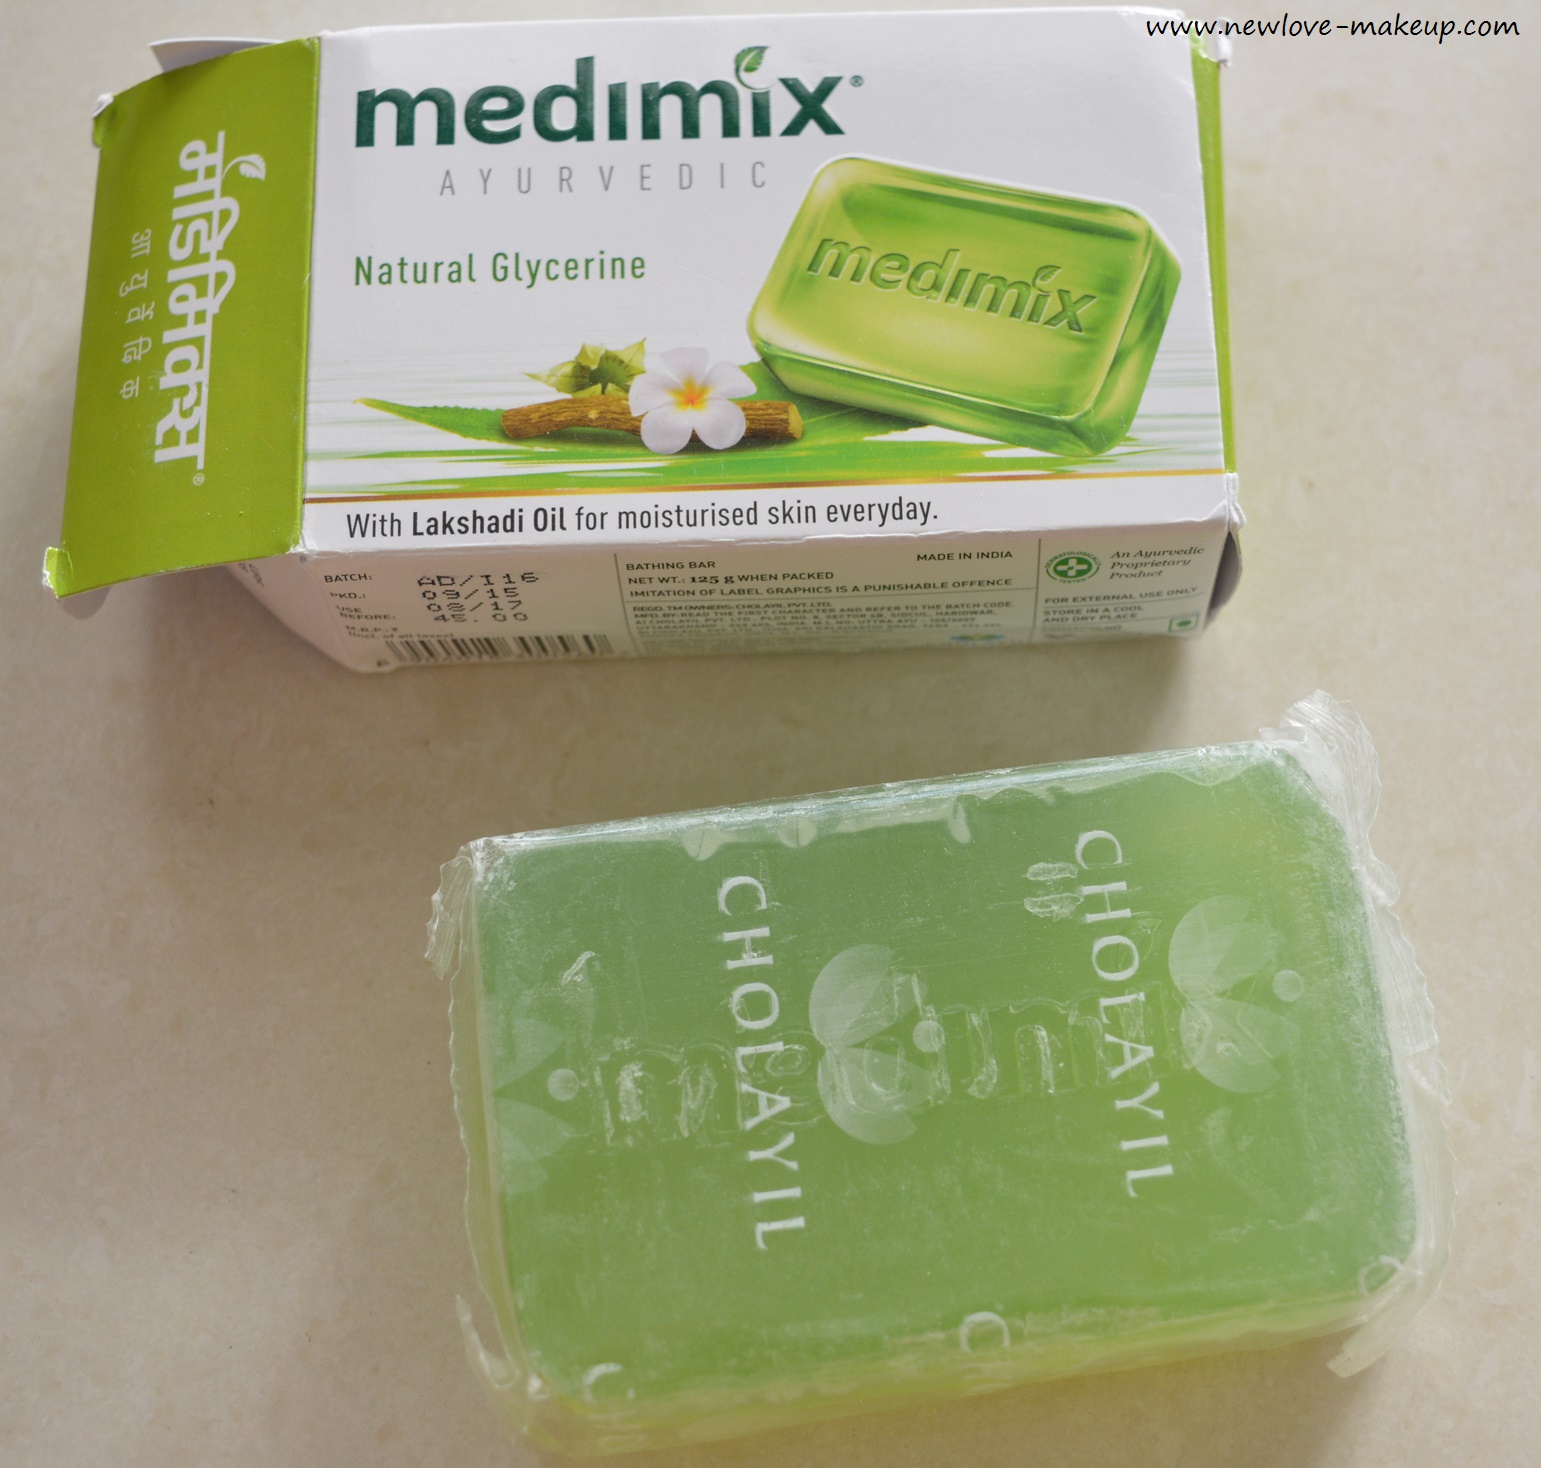 New Medimix Ayurvedic Natural Soap With Lakshadi Oil Review - New - Makeup